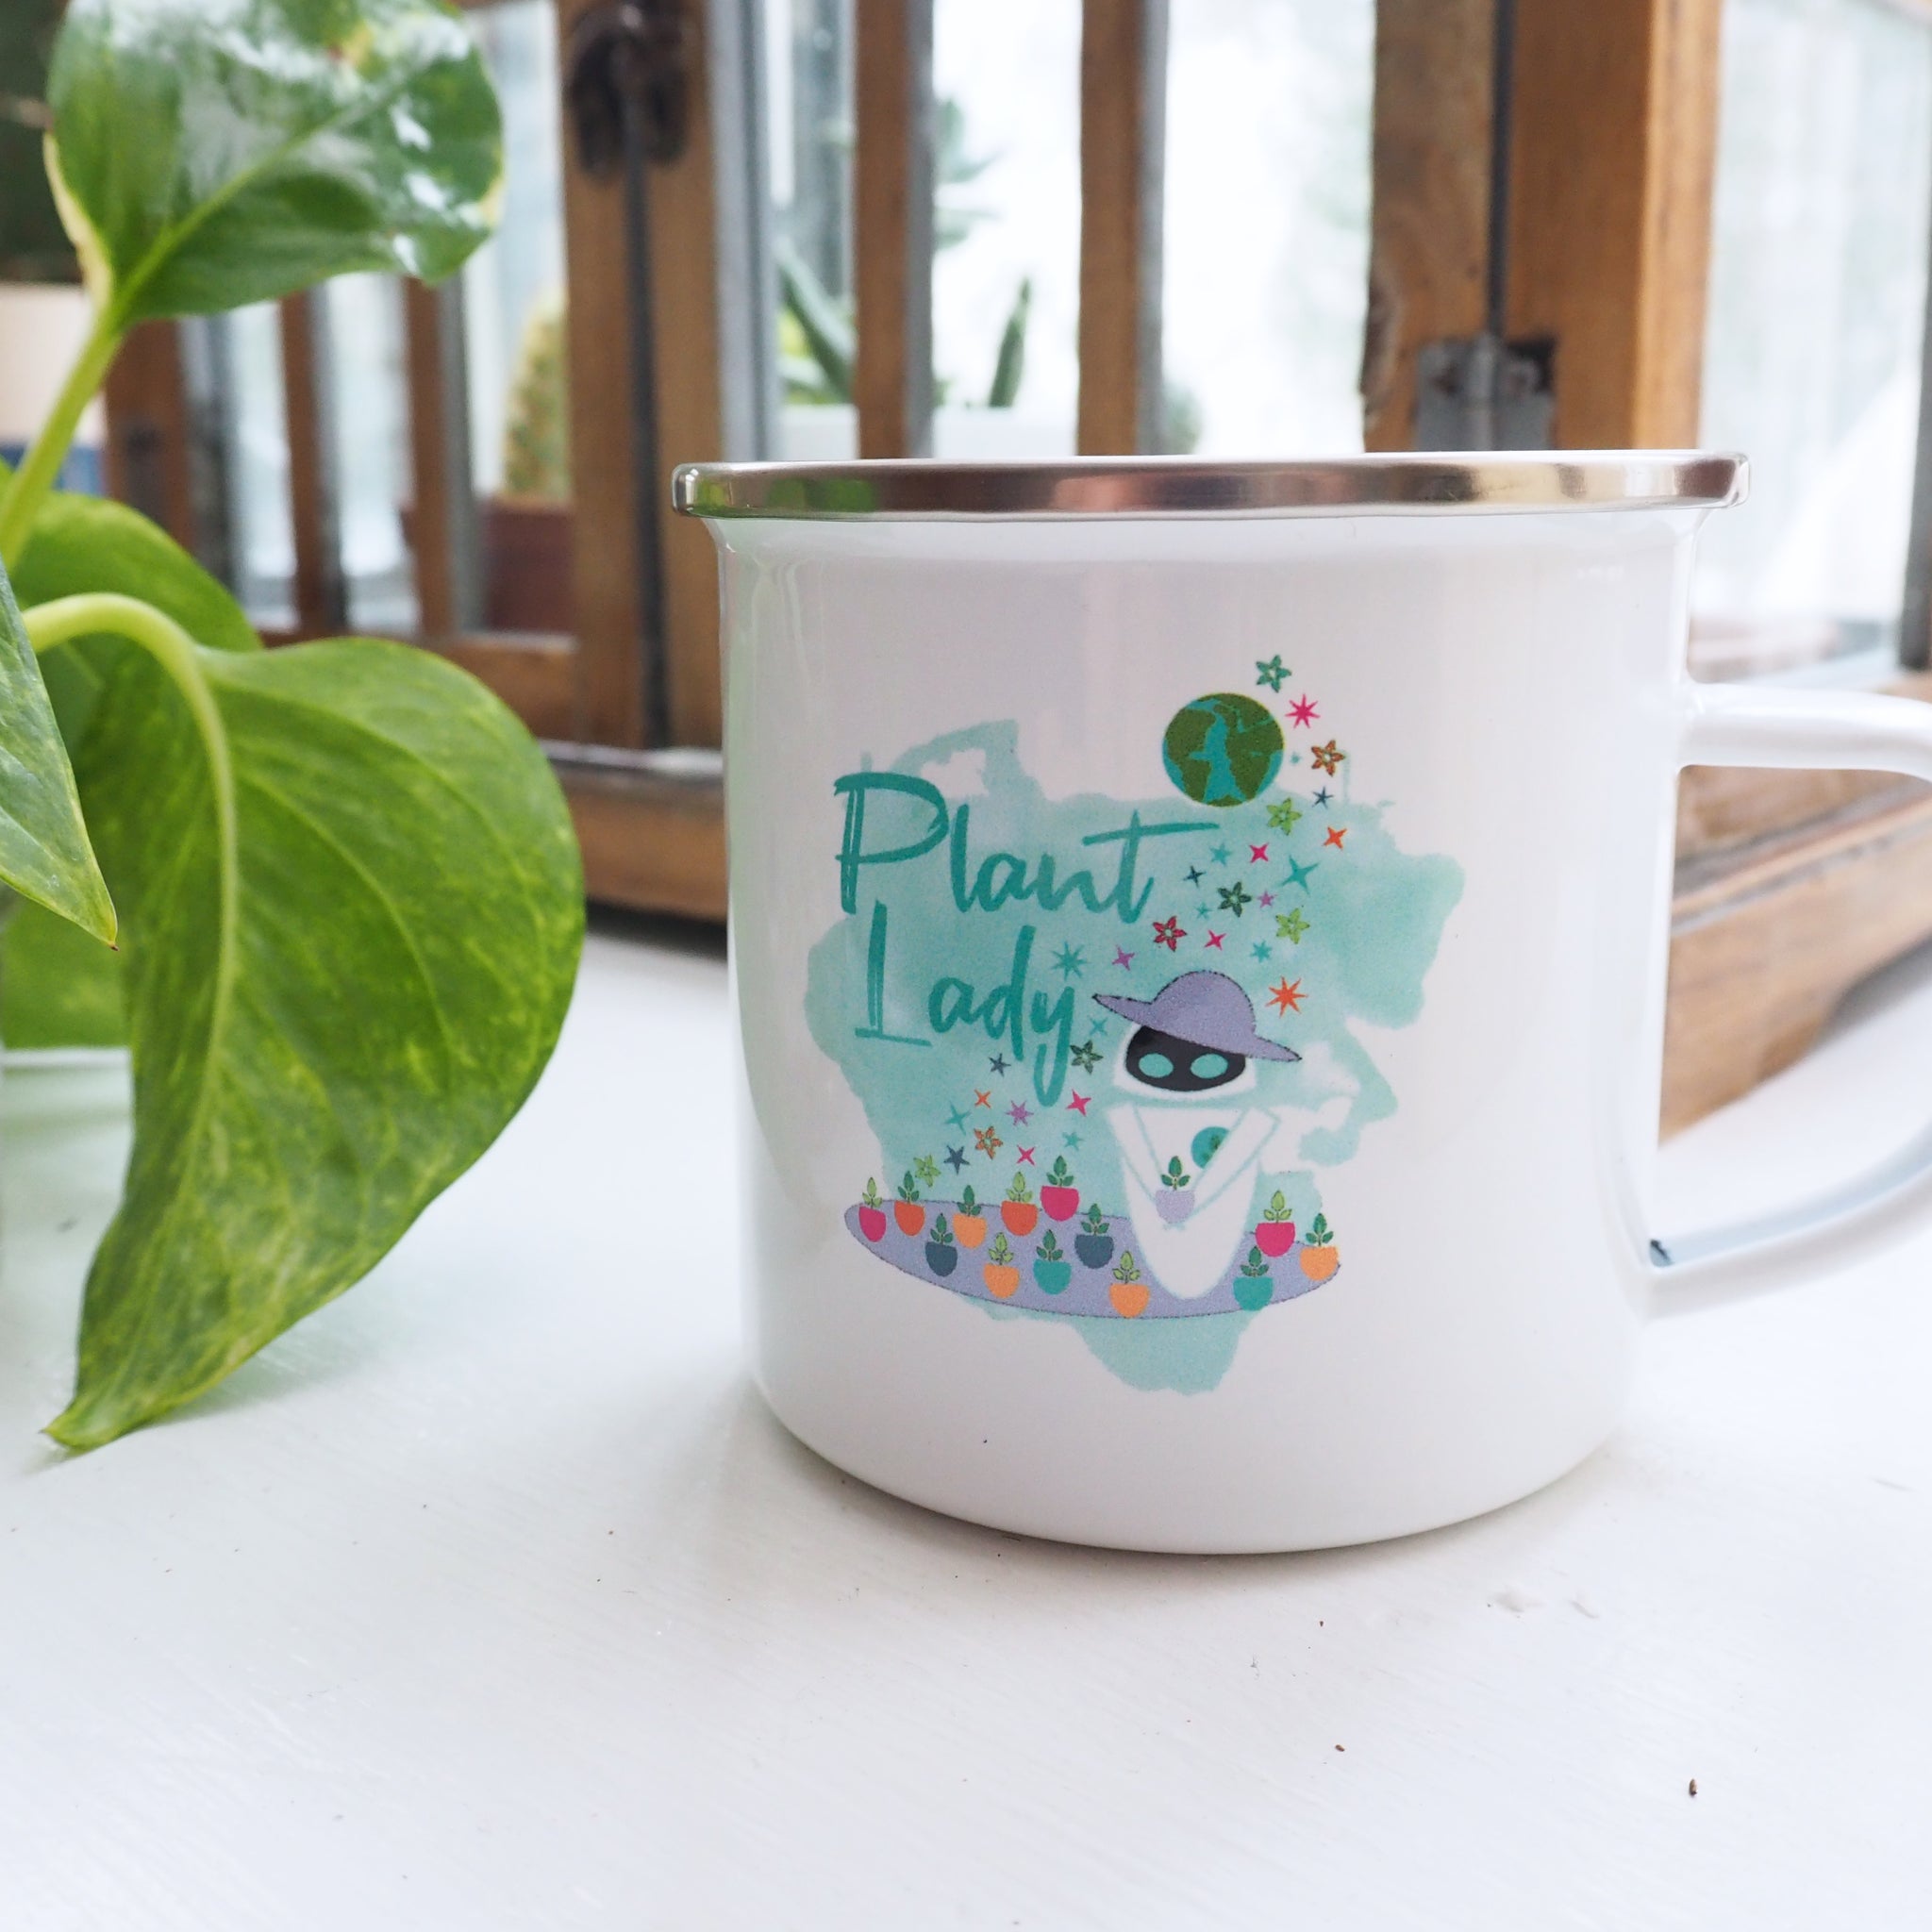 Plant Lady EVE Disney Wall-E Inspired Camping Mug